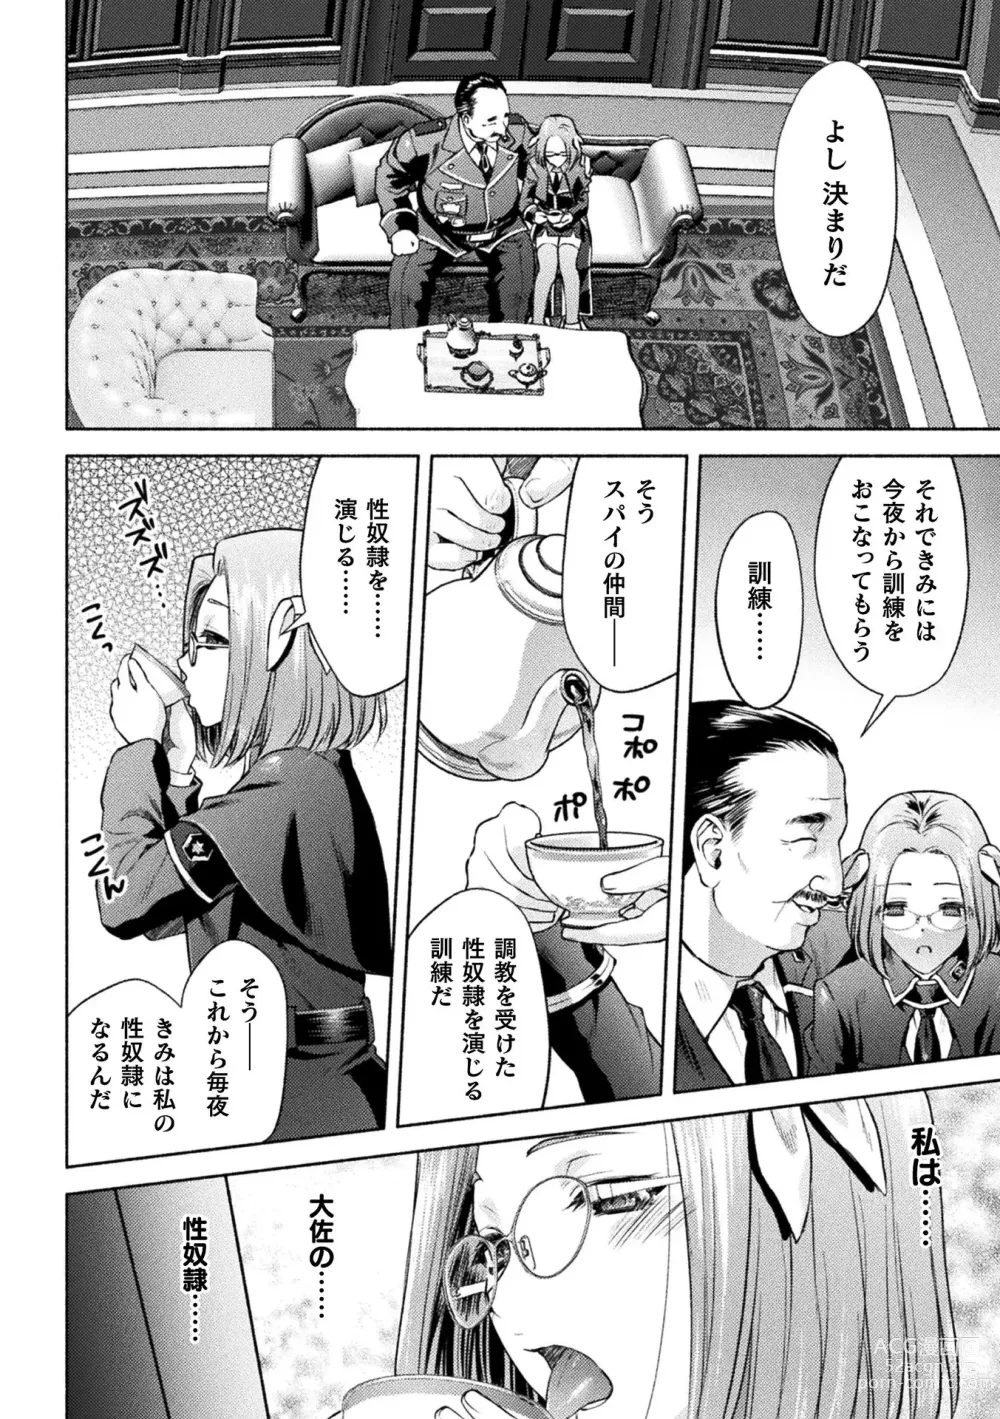 Page 18 of manga Kukkoro Heroines Vol. 34